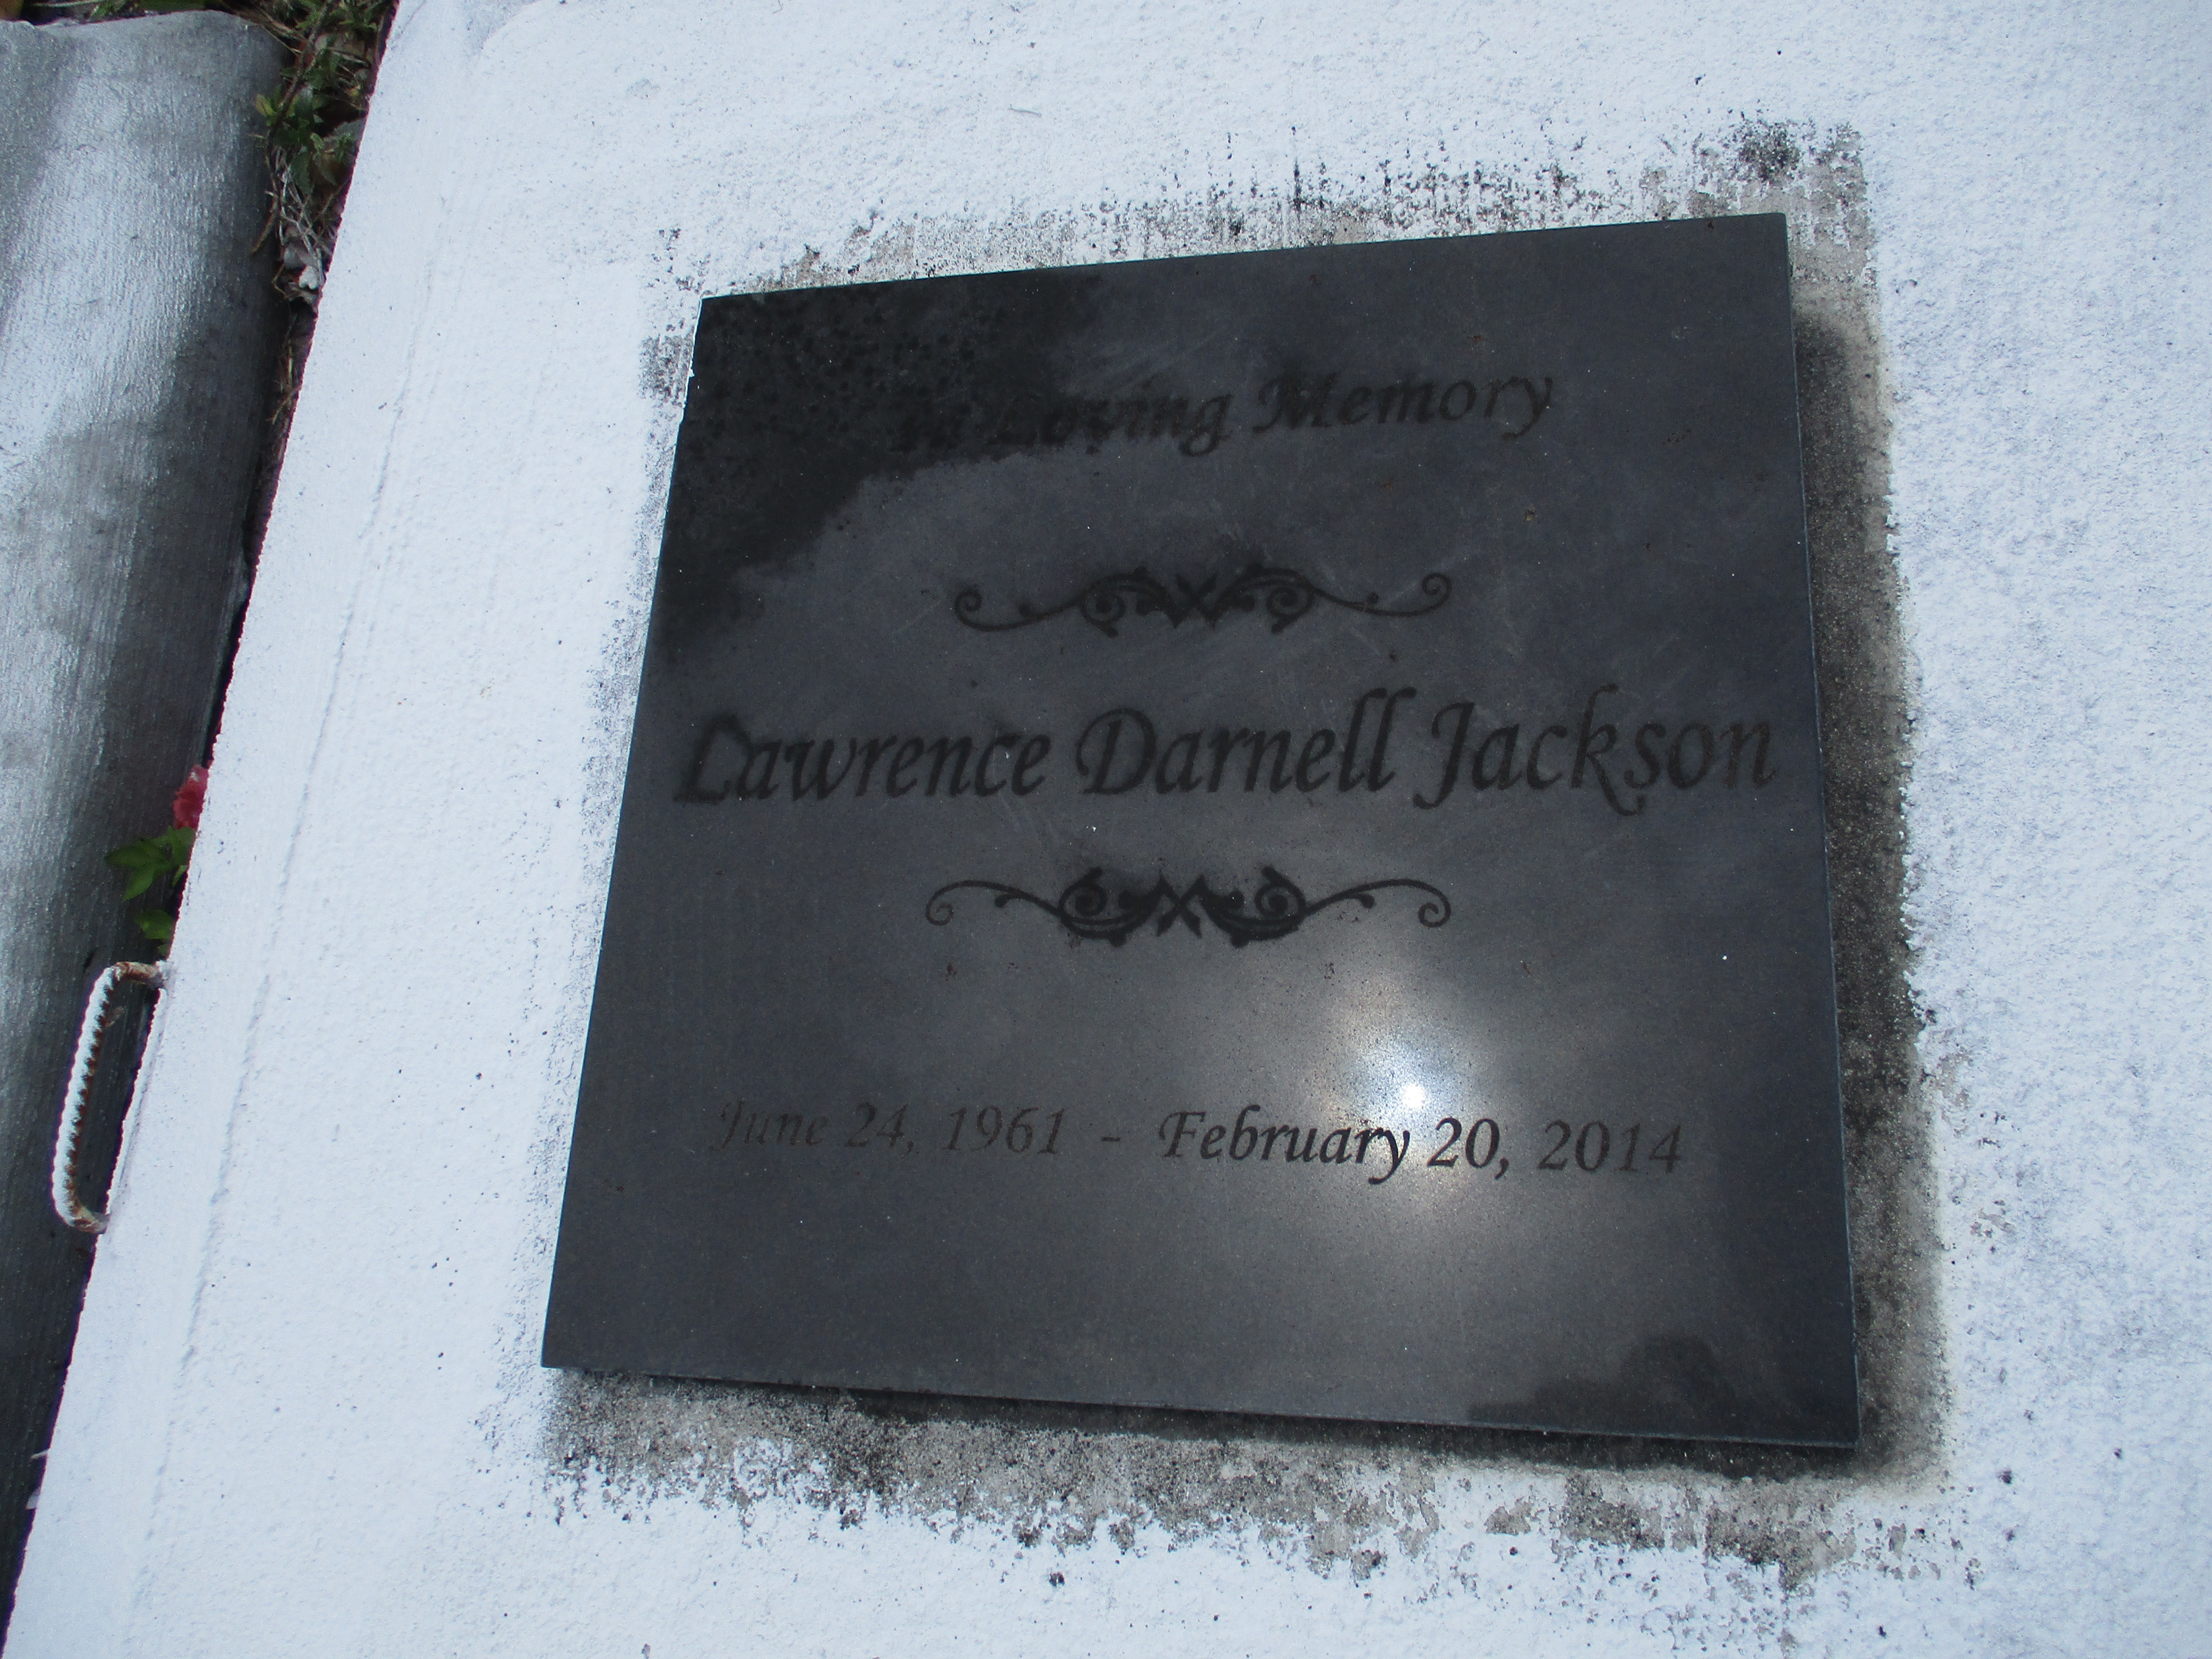 Lawrence Darnell Jackson